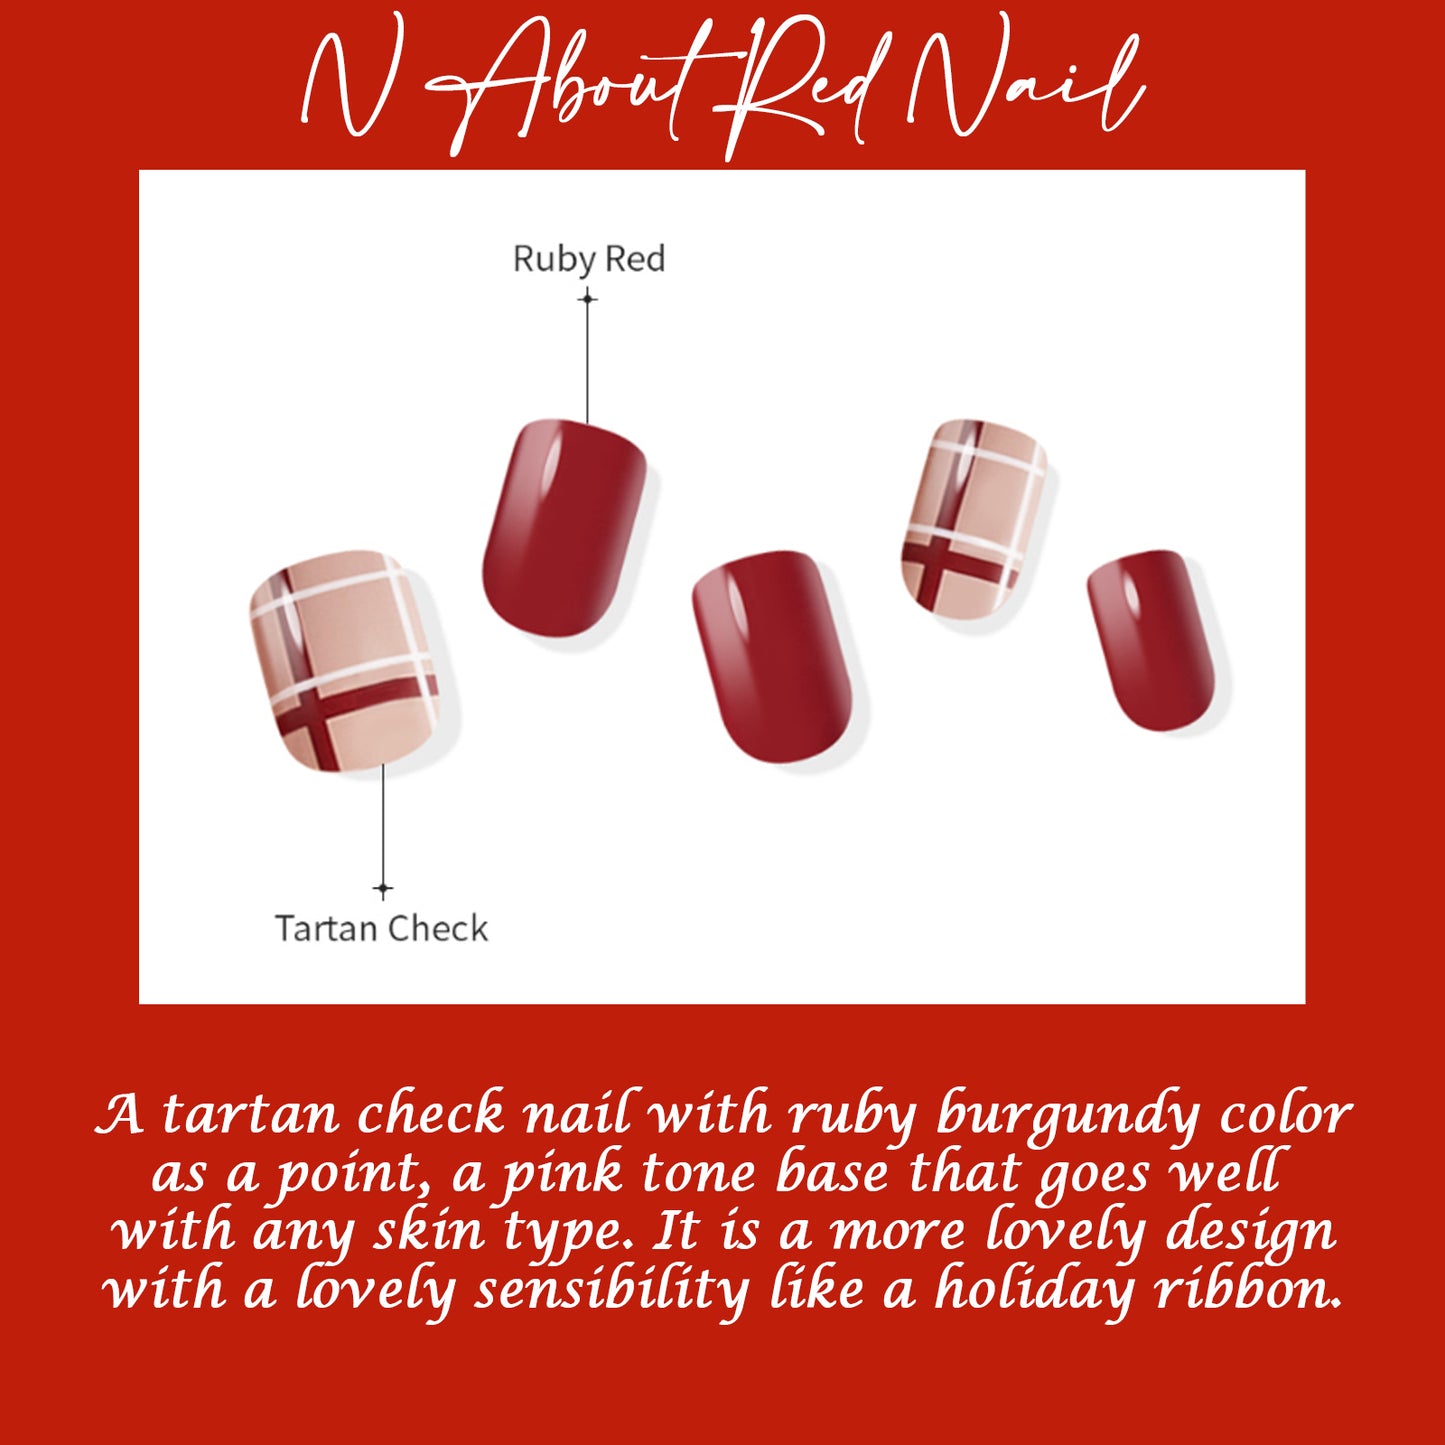 Muzmak ((Regular Square) N About Red Nail) 36pcs Nail Art Pattern Sticker Set Semicure Nail